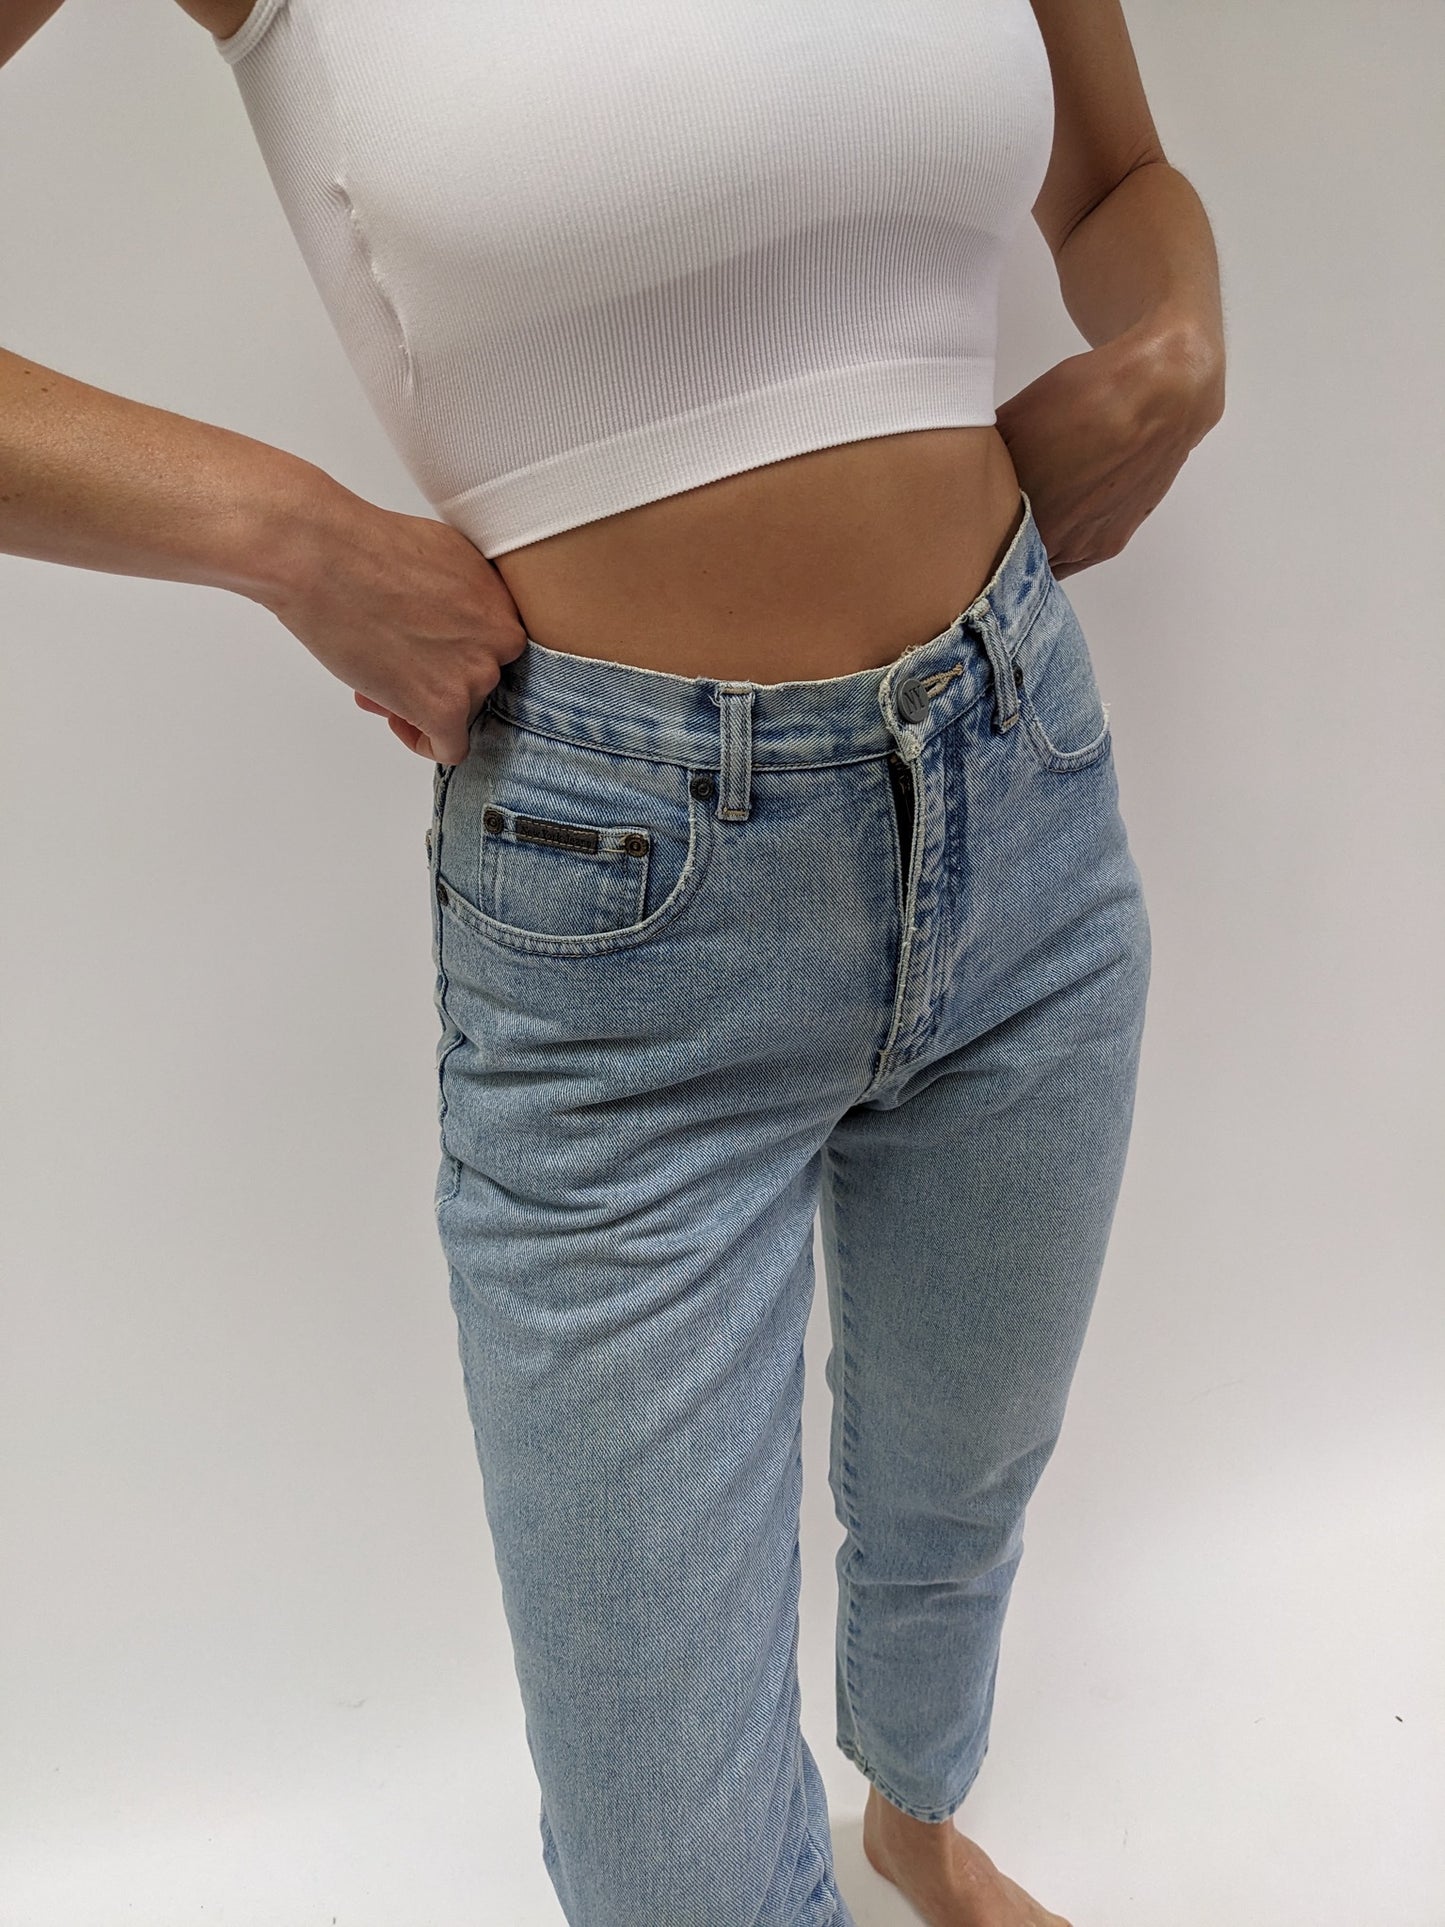 90s Light Wash Denim Jeans